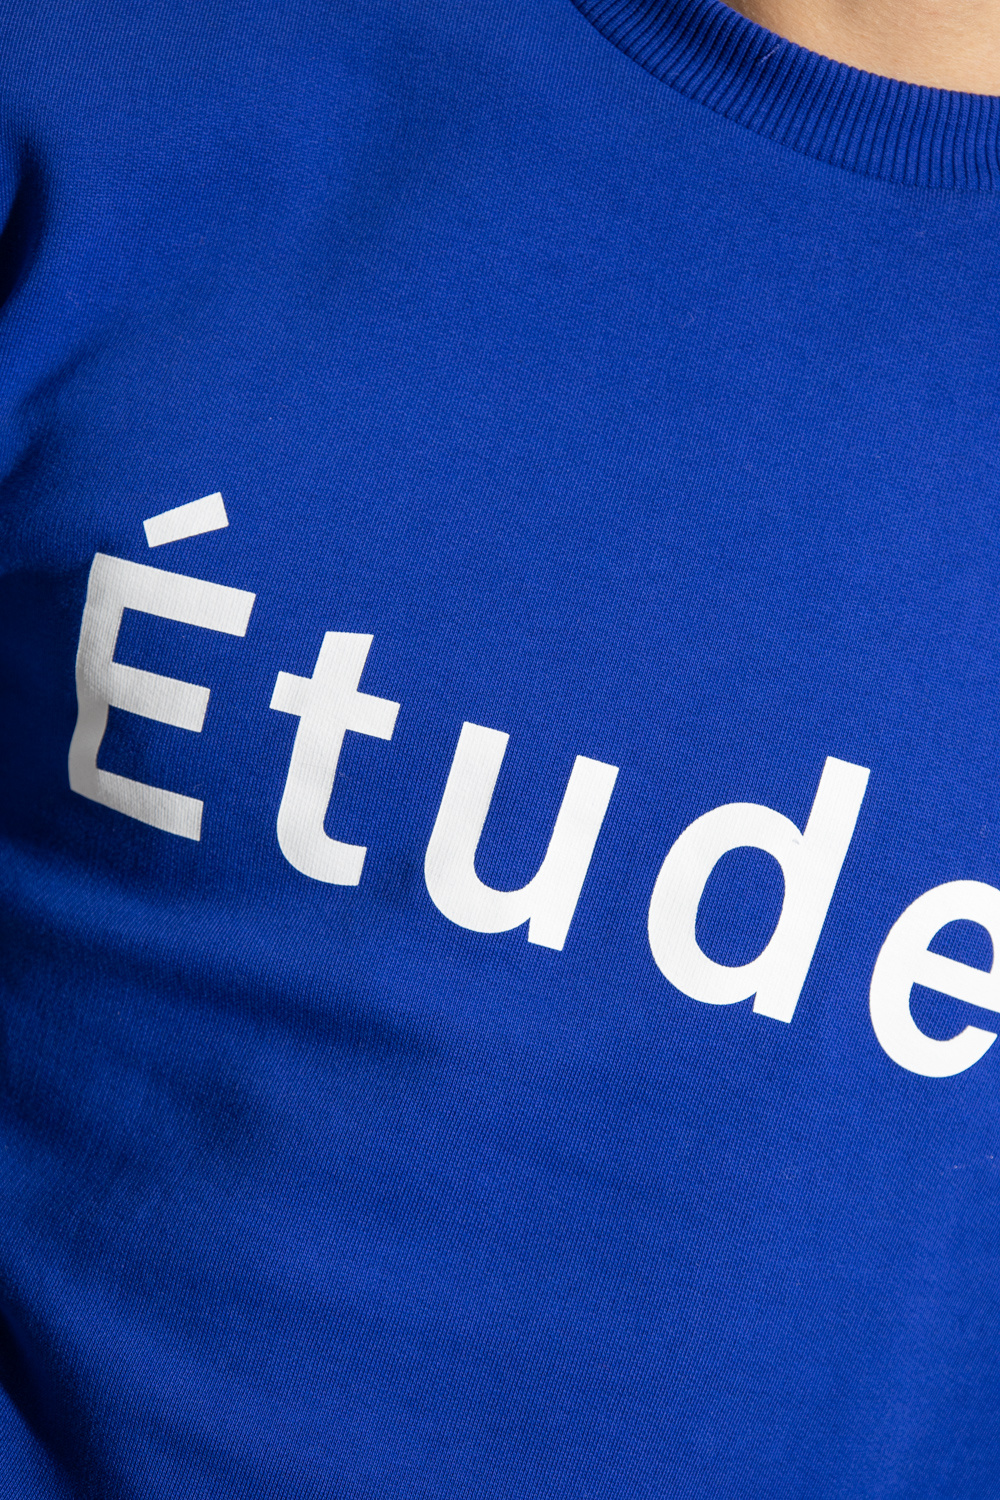 Etudes Air sweatshirt with logo